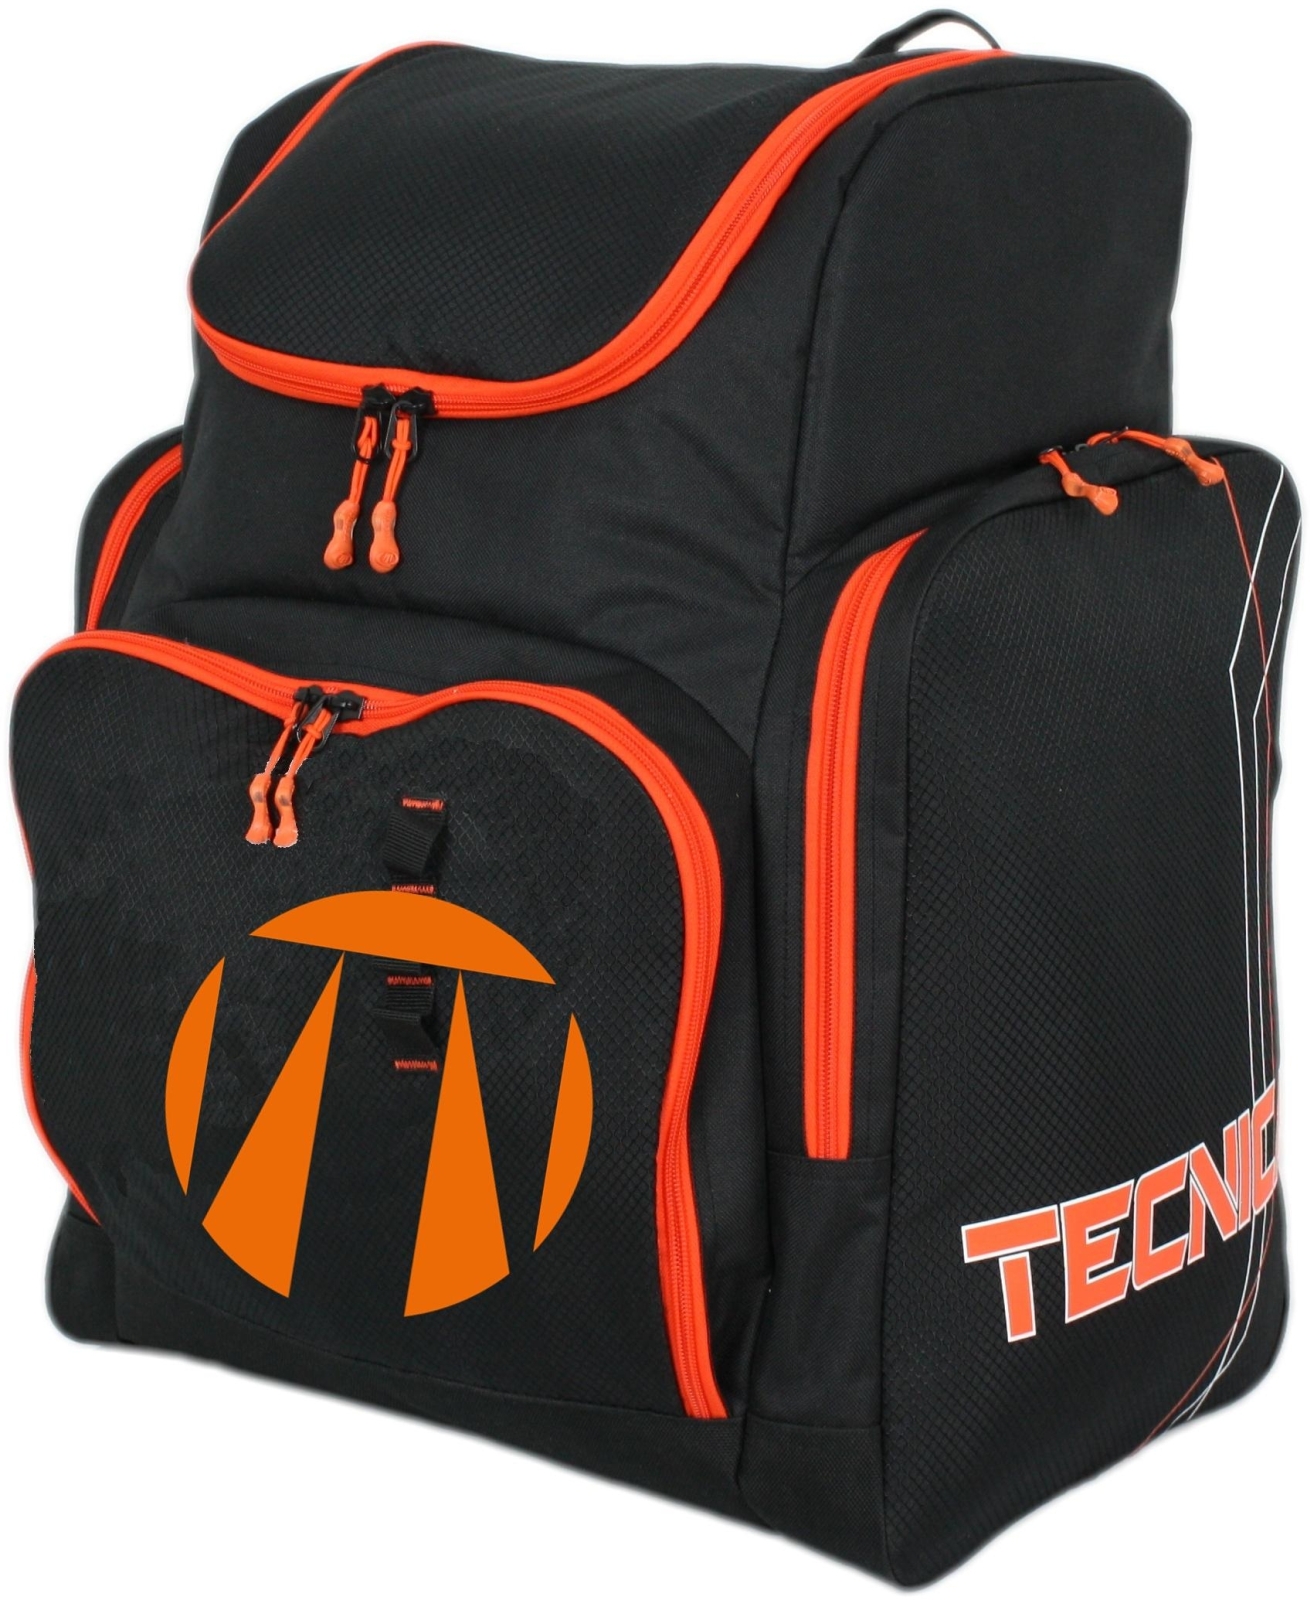 E-shop Tecnica Family/Team
Skiboot backpack - black/orange uni